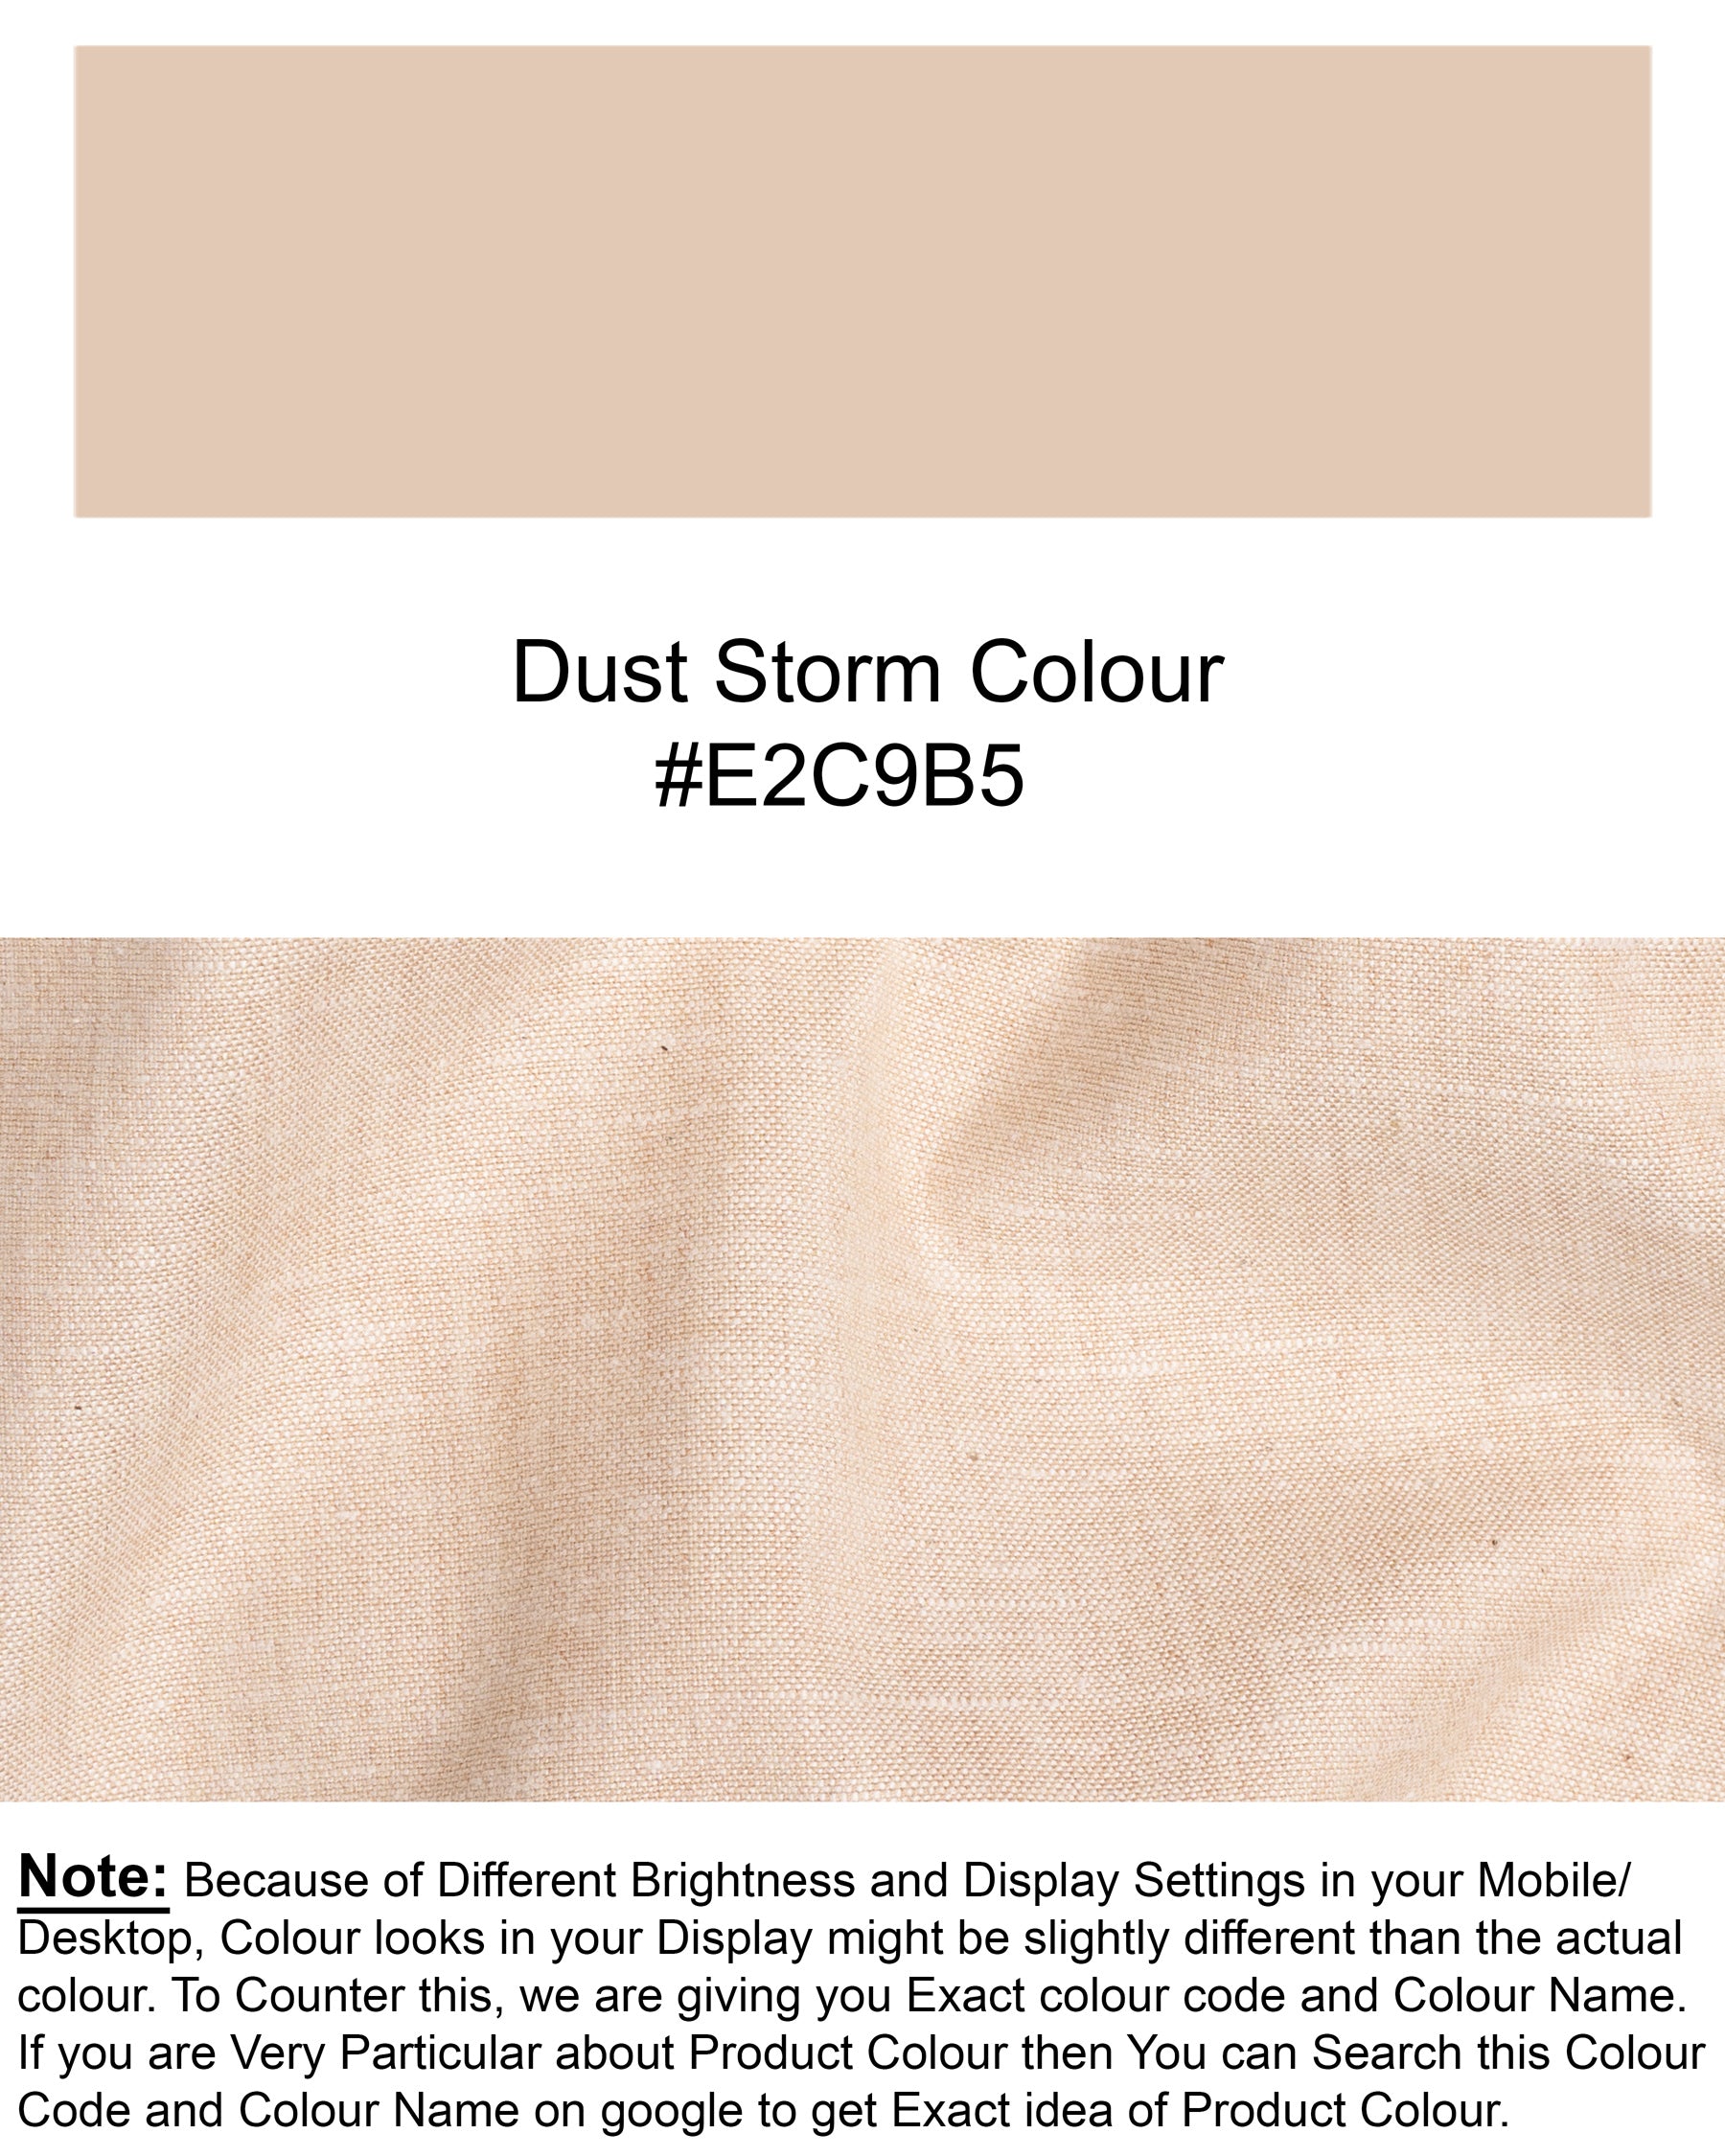 Dust Storm Cross-Buttoned Bandhgala luxurious Linen Suit ST1385-CBG2-36, ST1385-CBG2-38, ST1385-CBG2-40, ST1385-CBG2-42, ST1385-CBG2-44, ST1385-CBG2-46, ST1385-CBG2-48, ST1385-CBG2-50, ST1385-CBG2-52, ST1385-CBG2-54, ST1385-CBG2-56, ST1385-CBG2-58, ST1385-CBG2-60